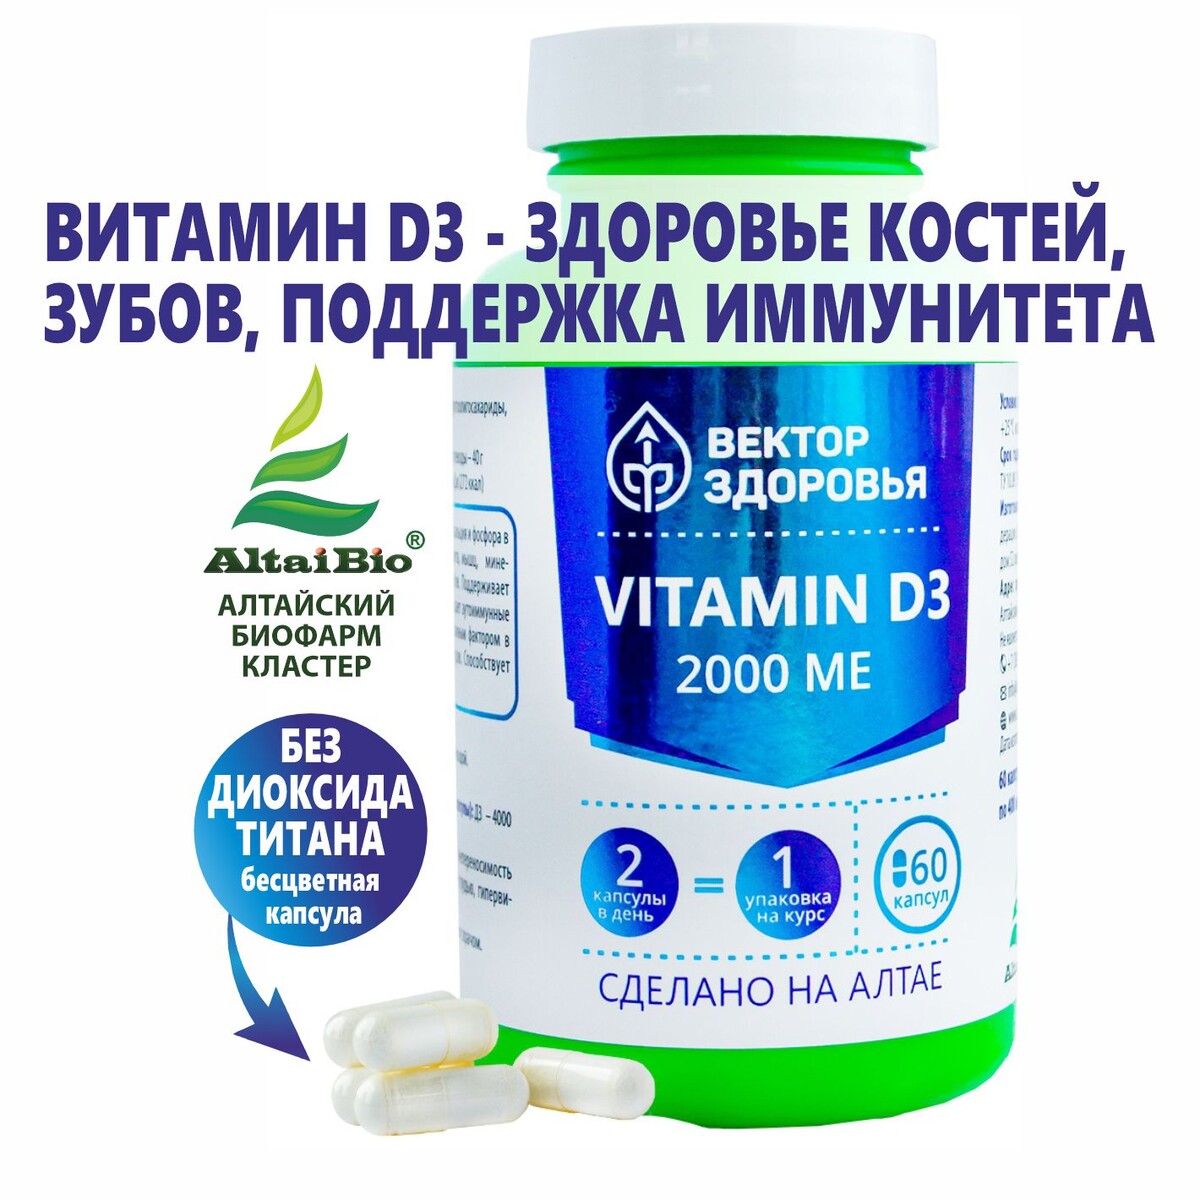  vitamin d3 2000 